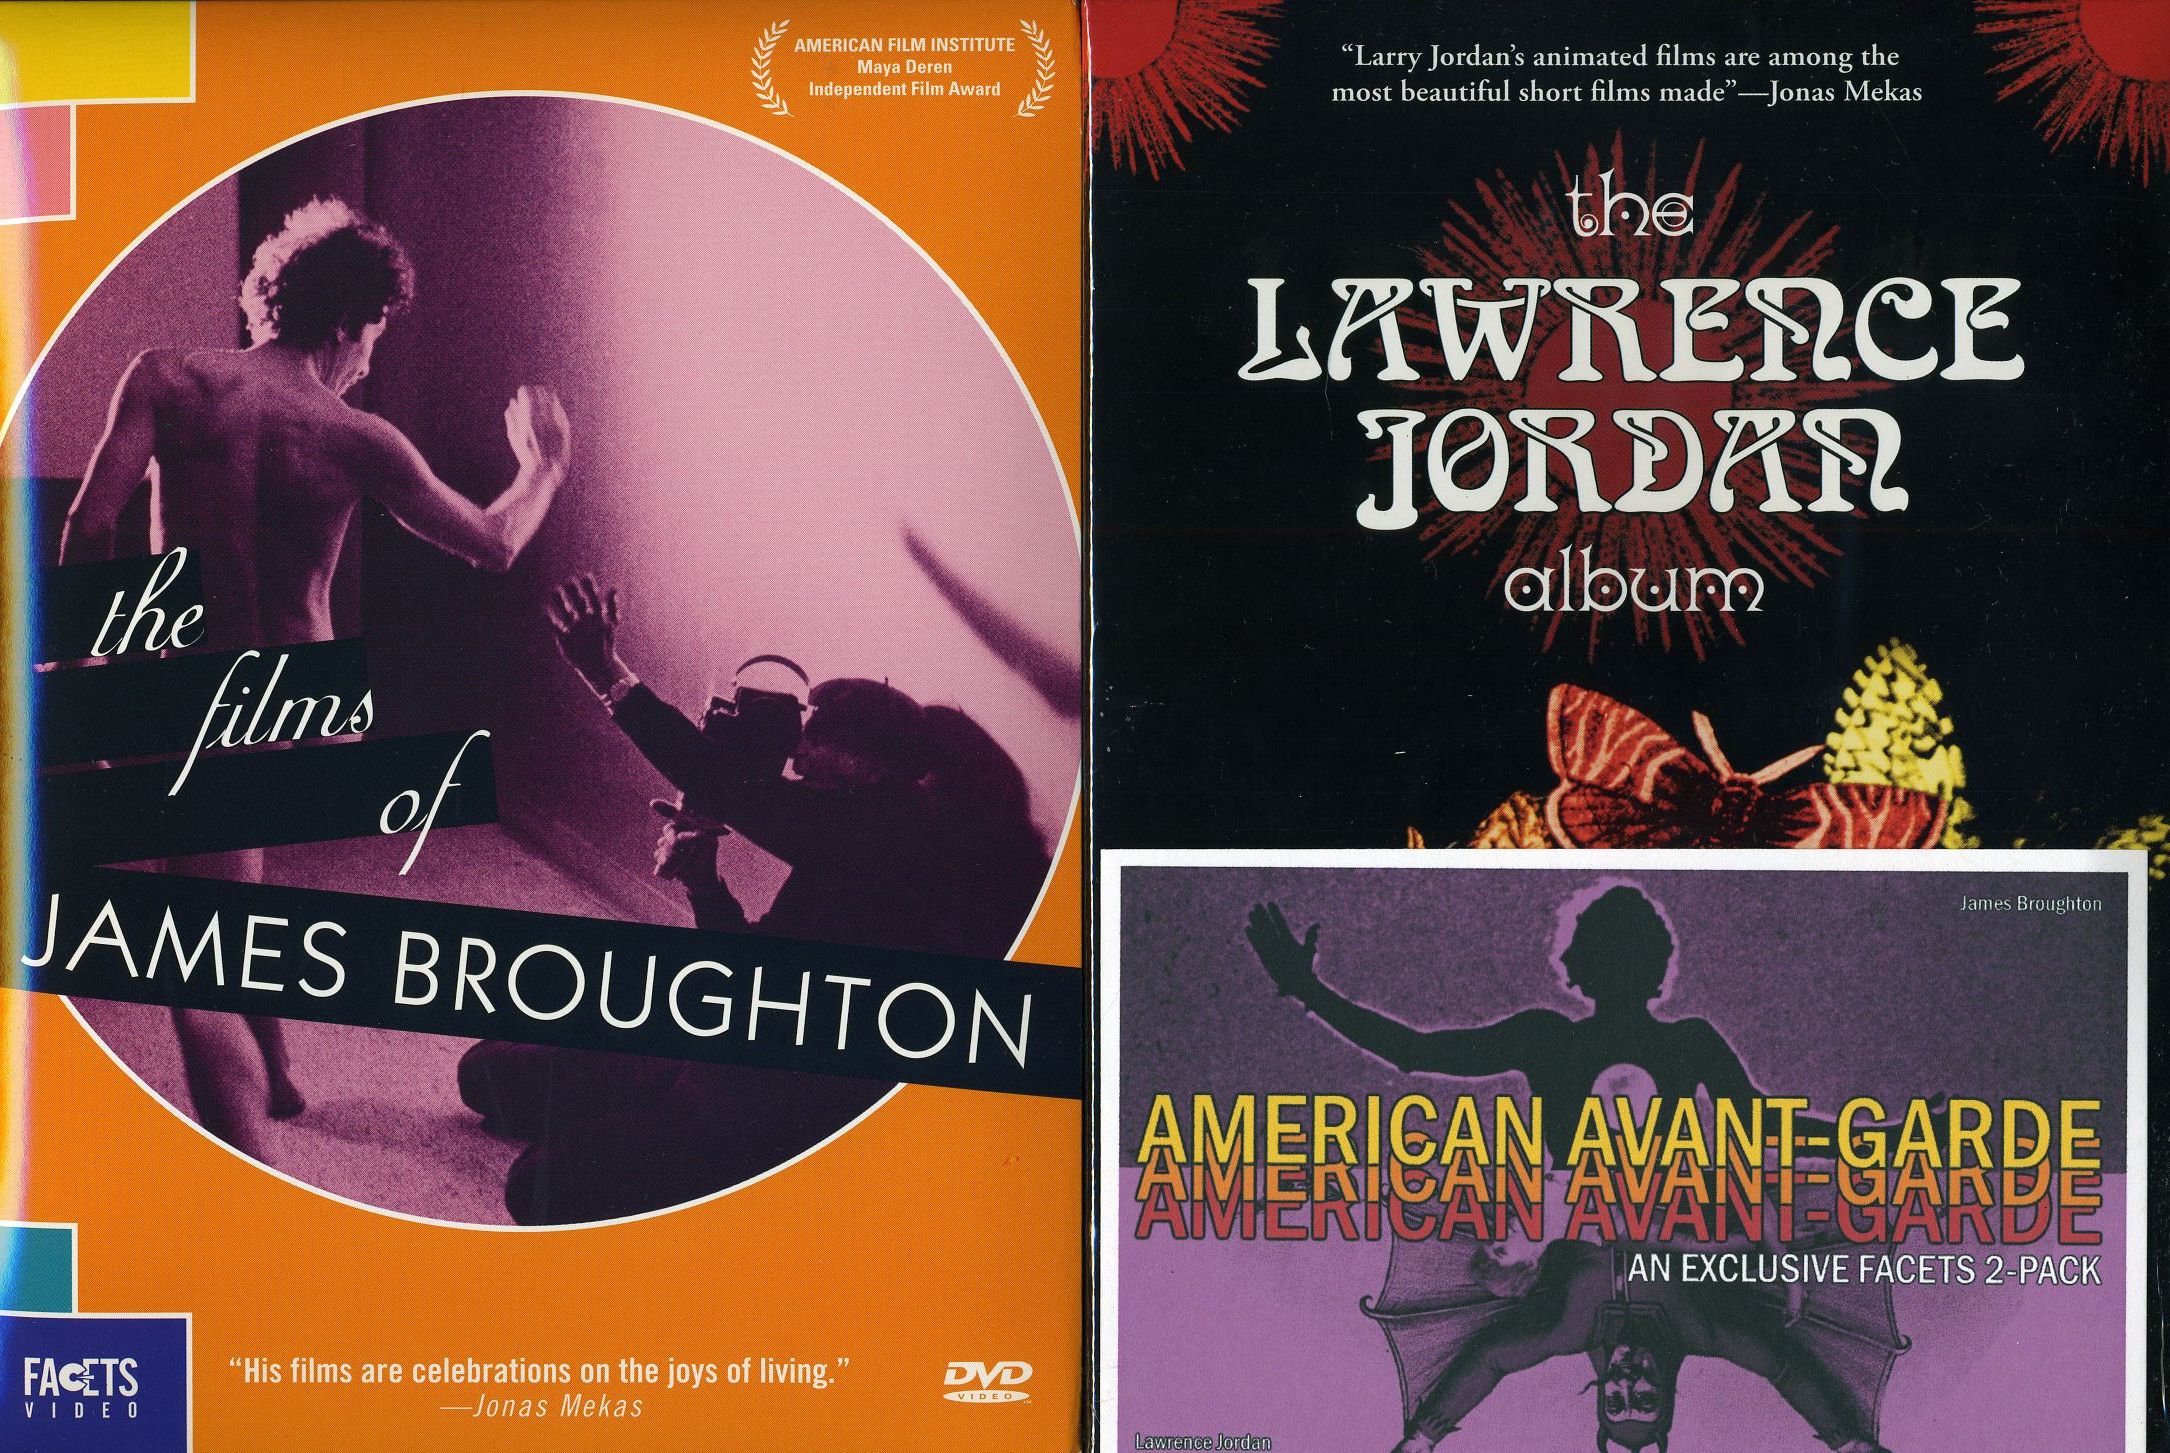 LAWRENCE JORDAN ALBUM / FILMS OF JAMES BROUGHTON